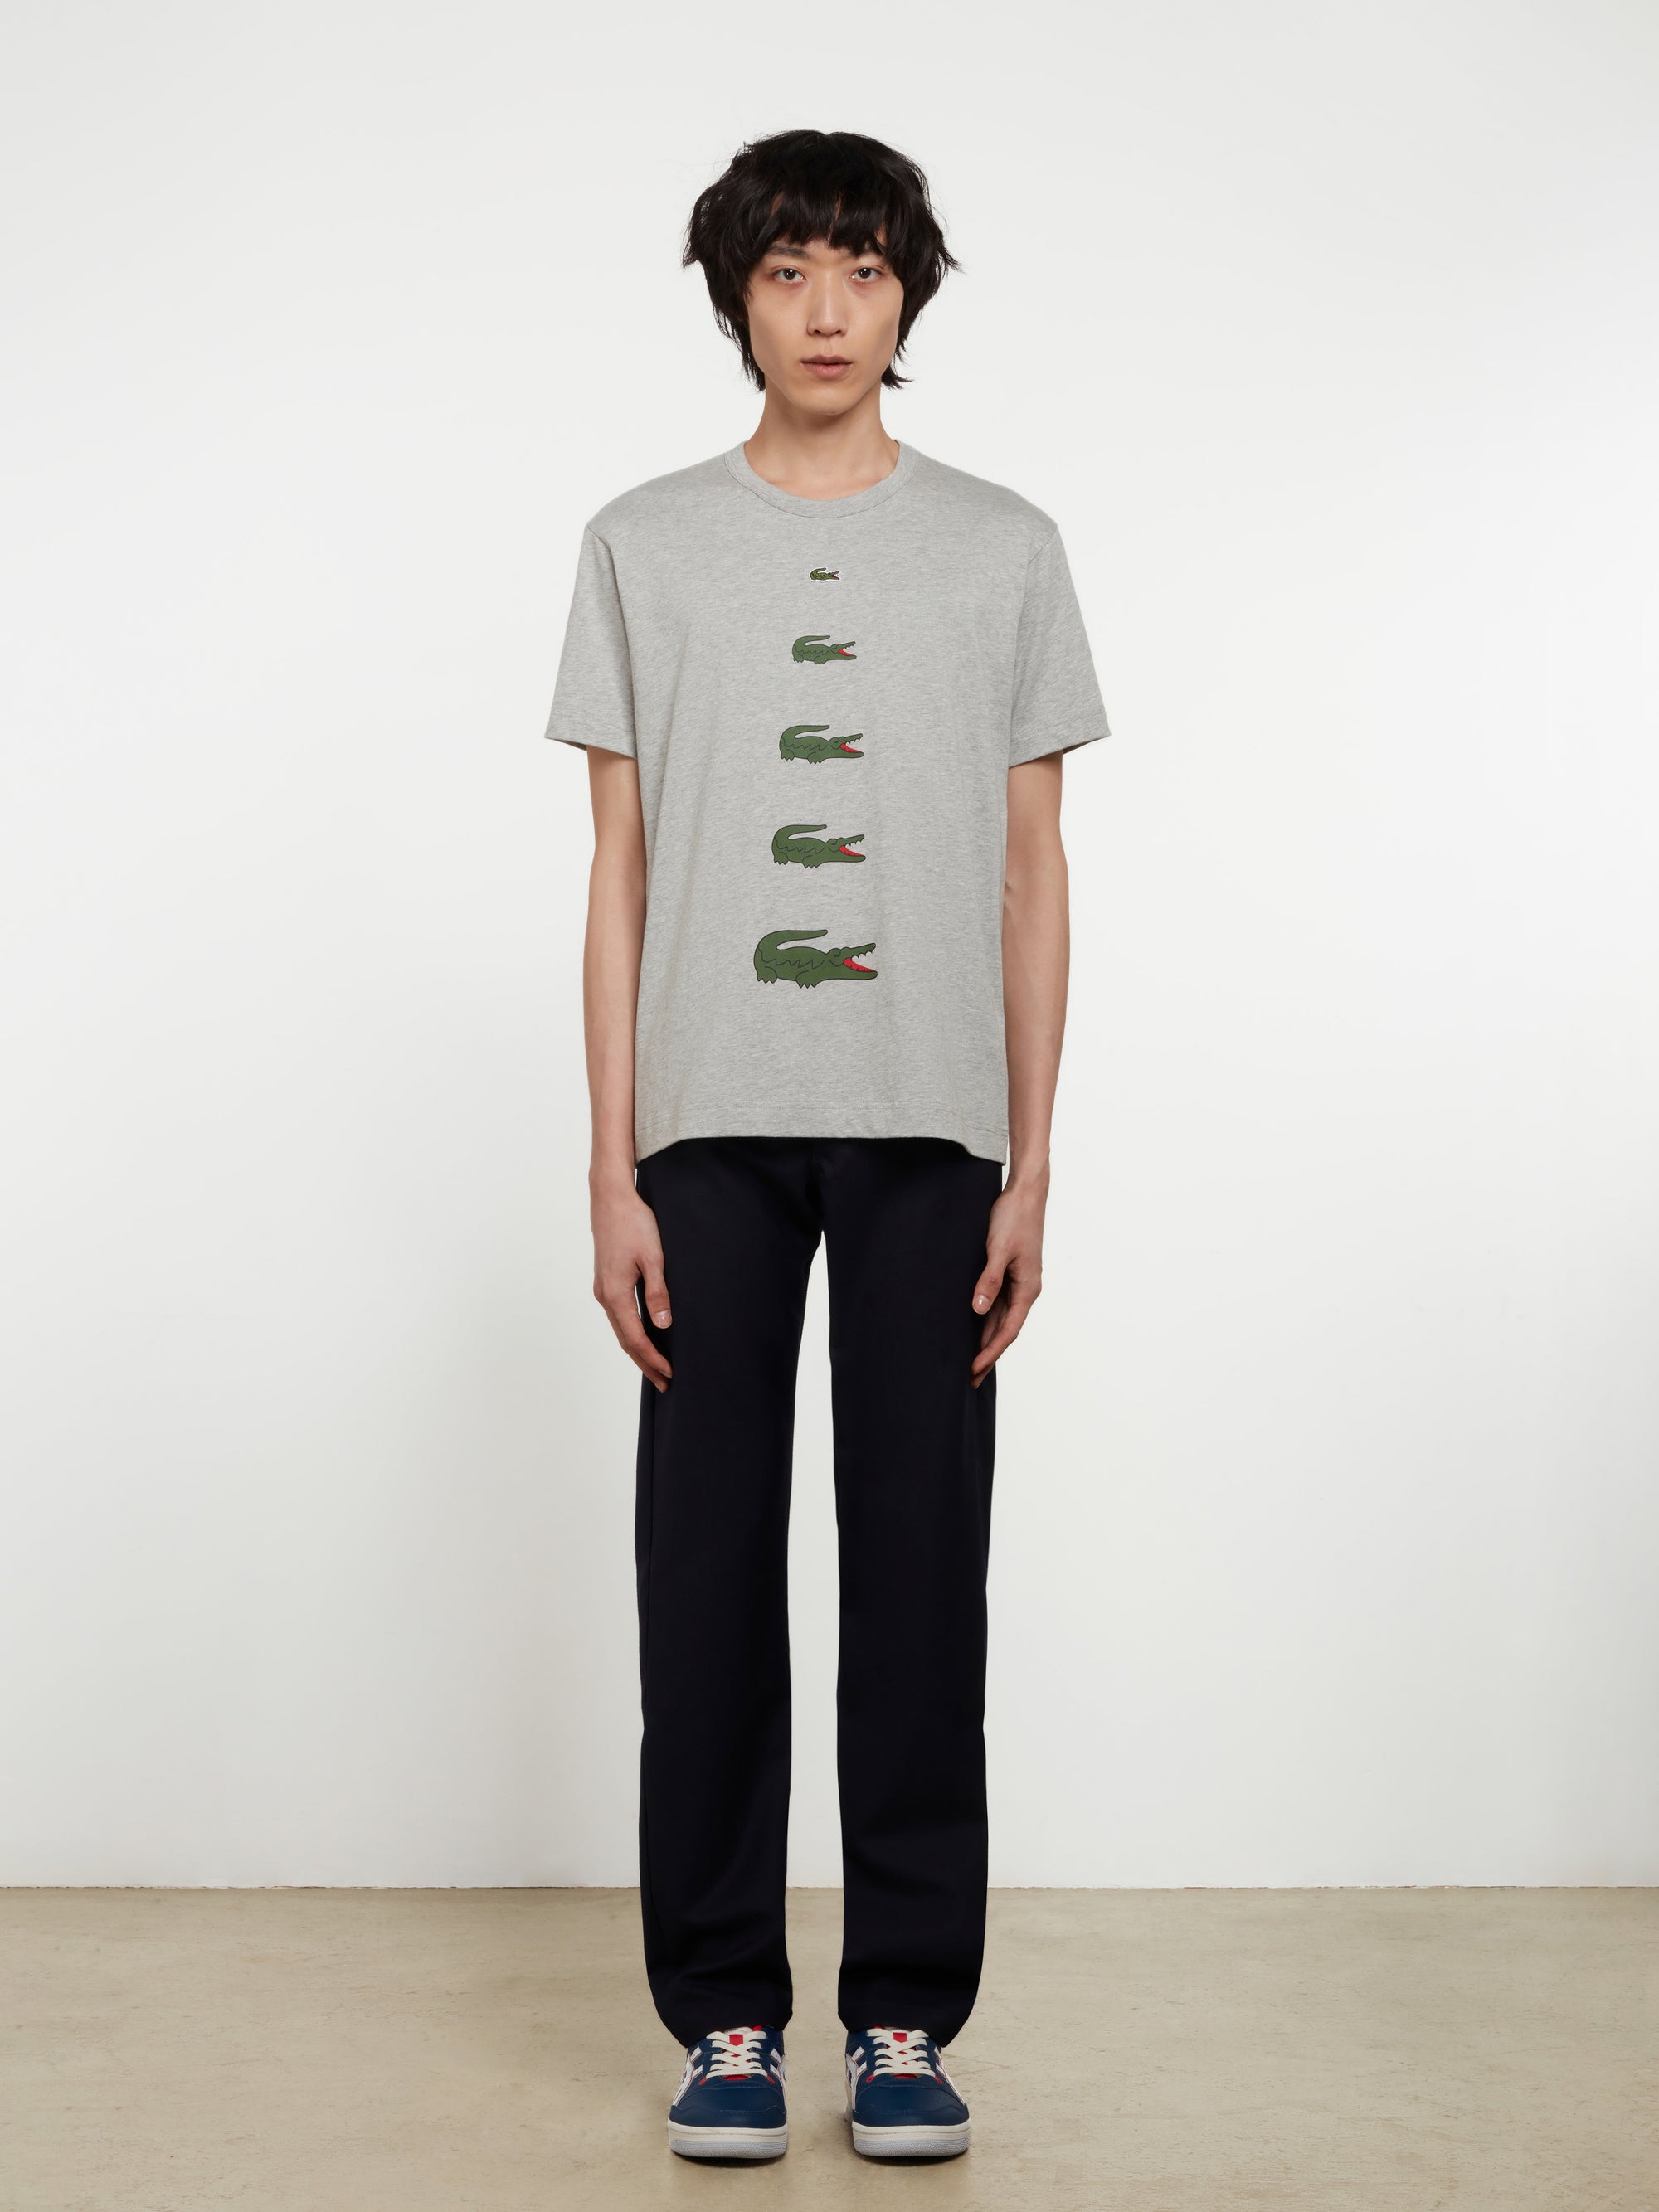 CDG Shirt - Lacoste Men’s Printed T-Shirt - (Top Grey) view 4